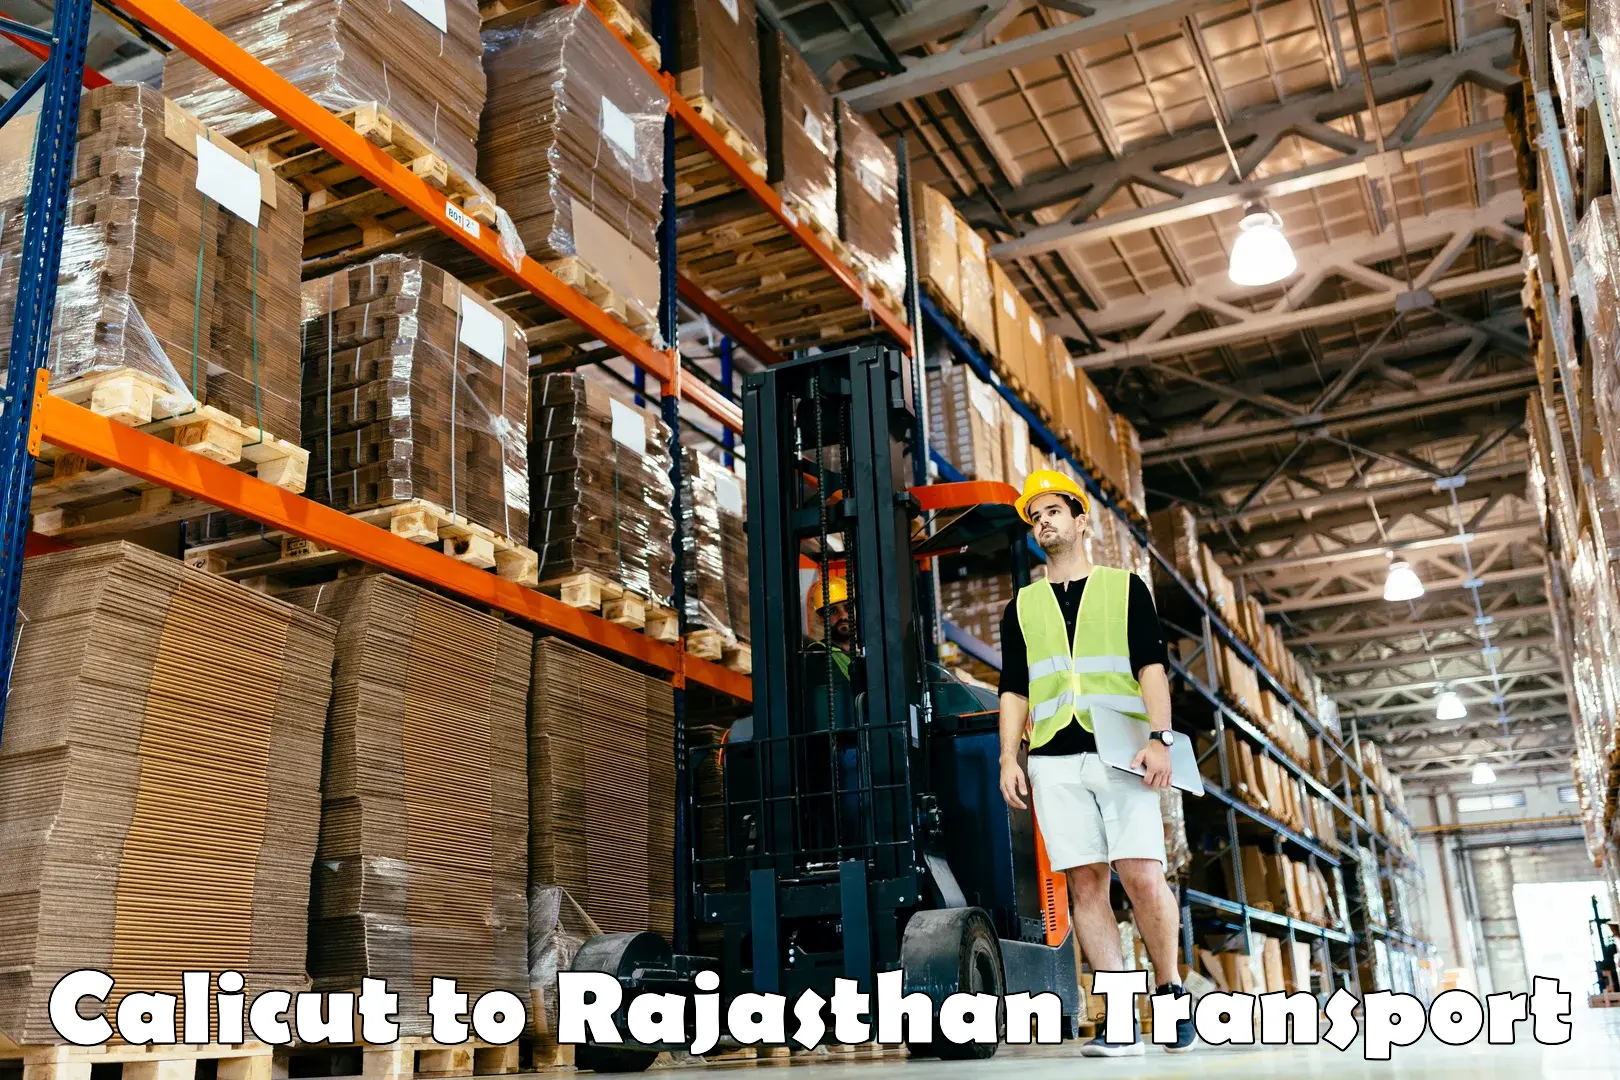 Shipping partner Calicut to Rajasthan